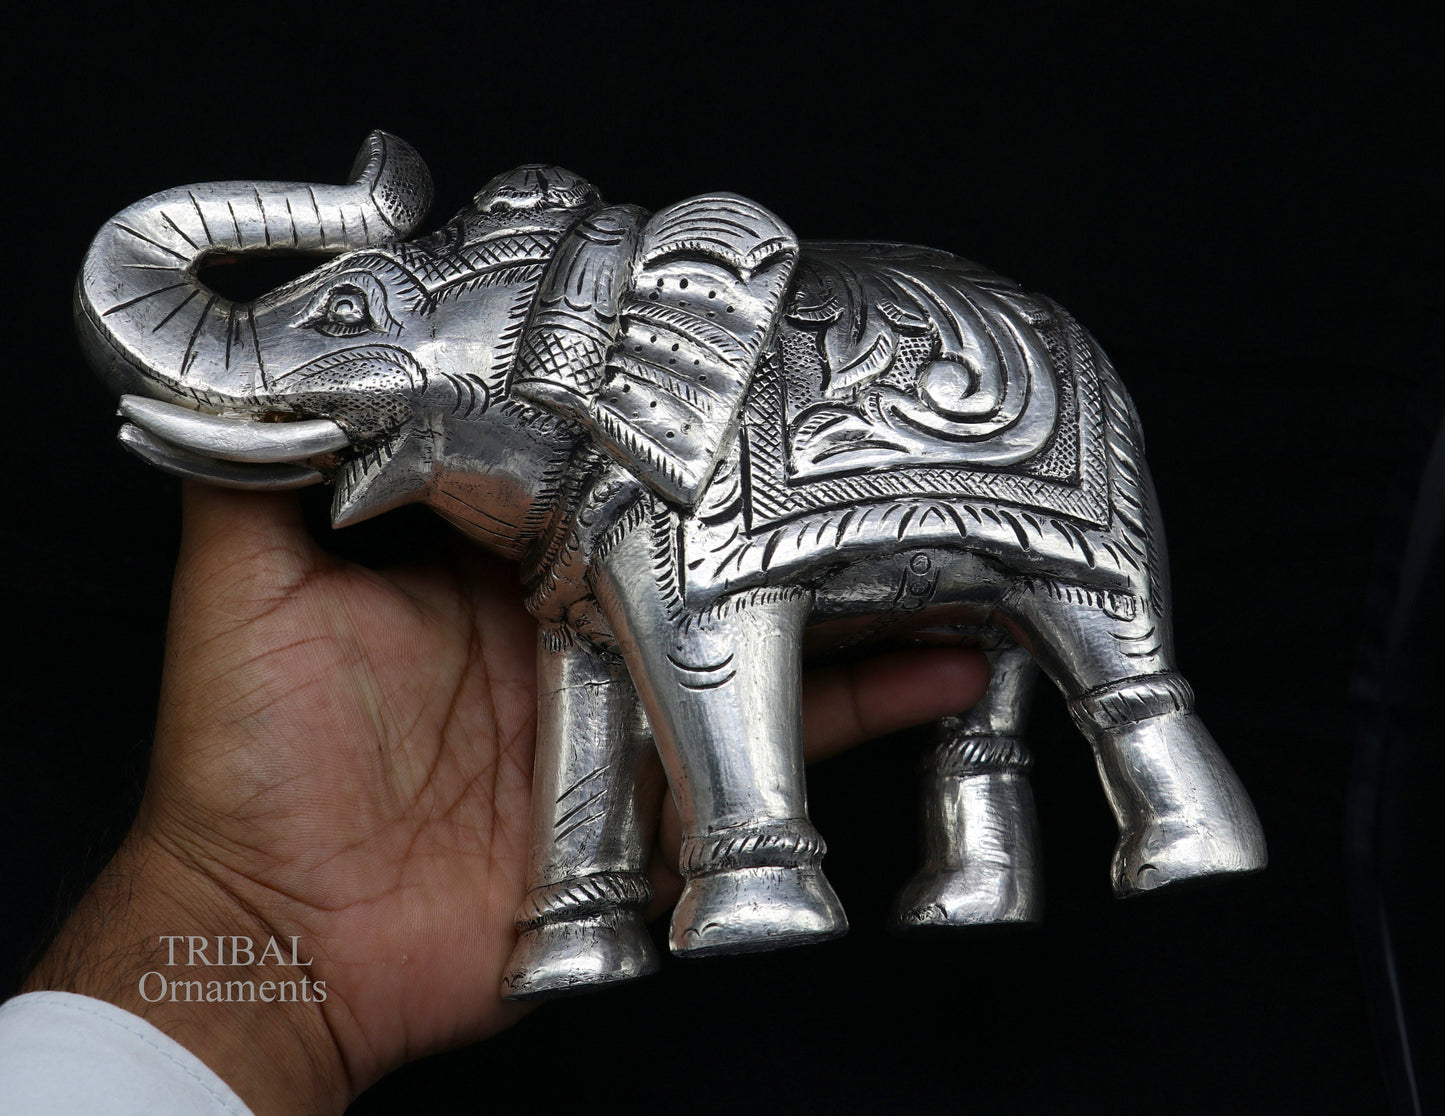 999 fine silver handcrafted Nakshi design wooden base upper trunk Elephant statue puja article figurine for wealth & prosperity art533 - TRIBAL ORNAMENTS